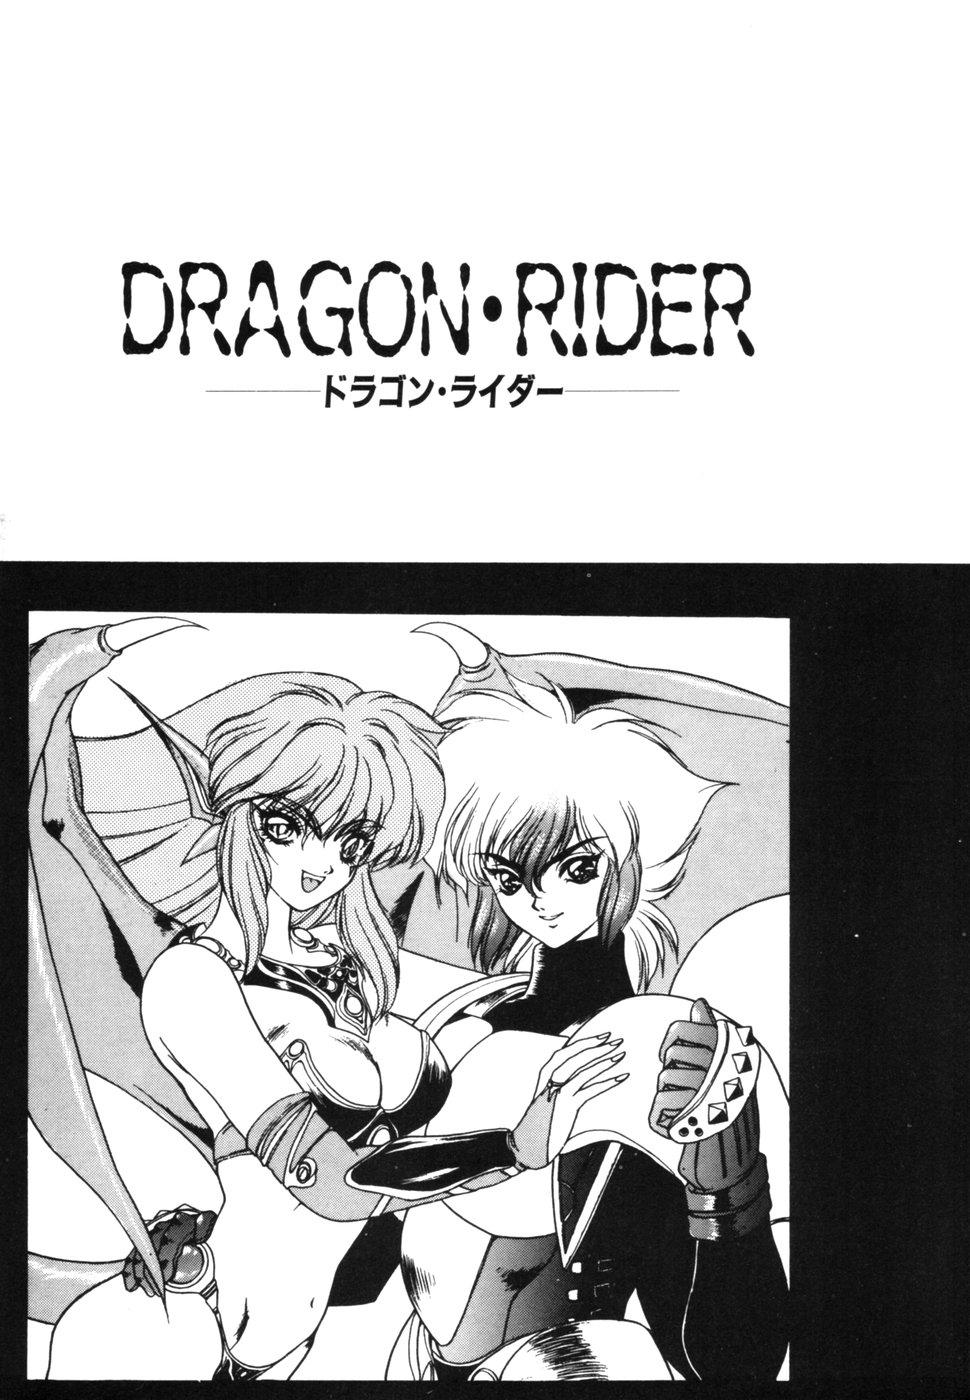 Dragon rider 189